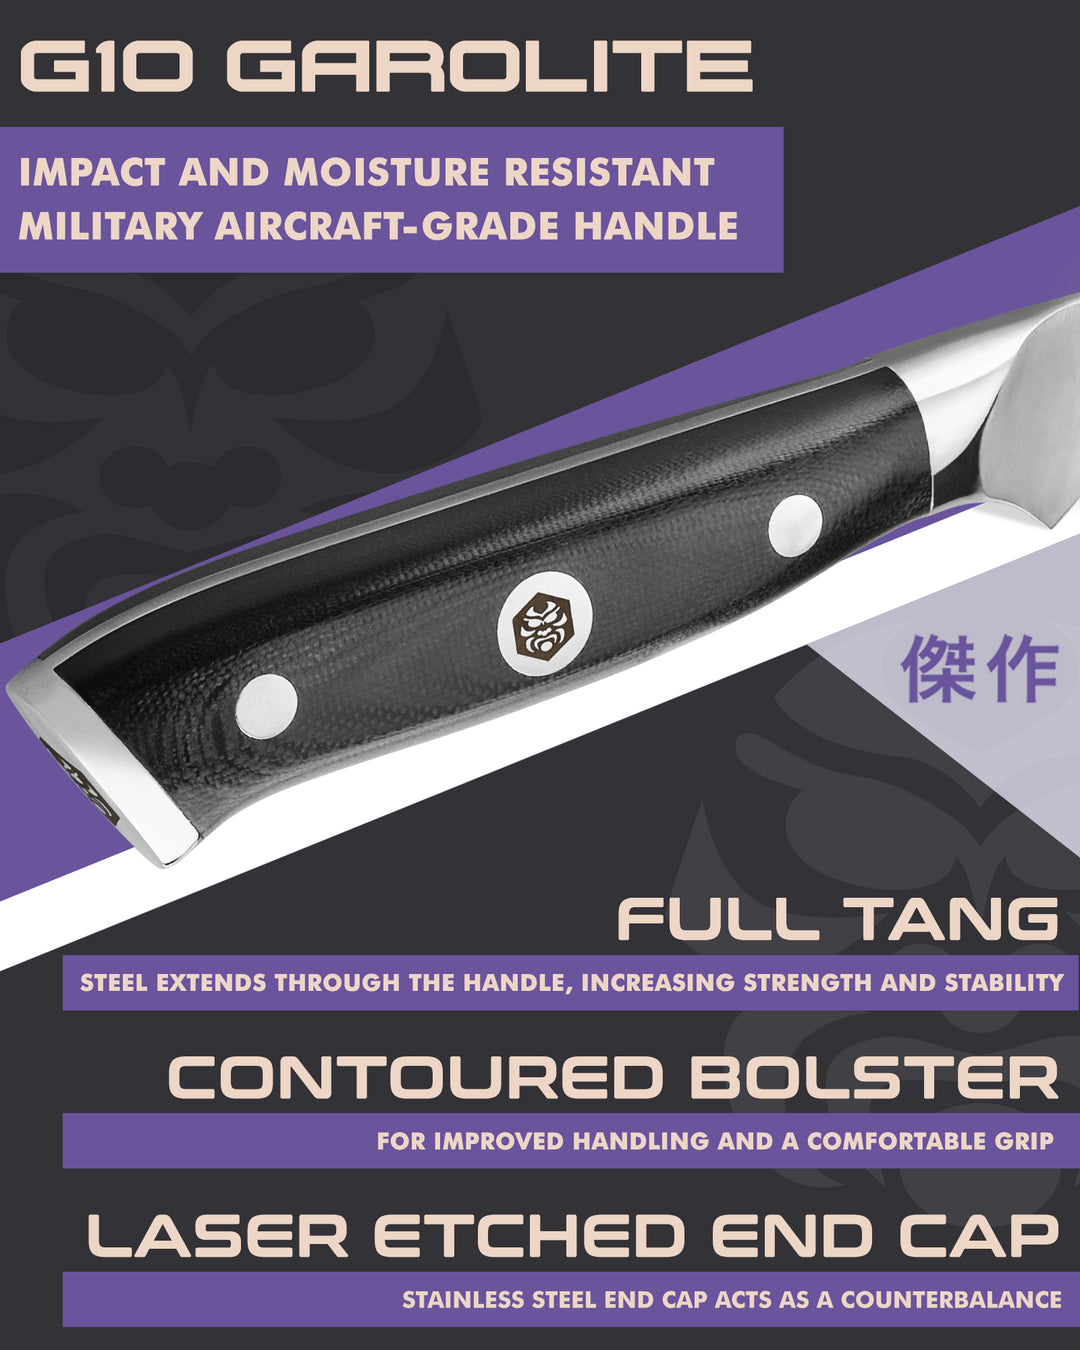 Kessaku Dynasty Tourne Knife handle features: G10 handle, full tang, contoured bolster, laser etched end cap